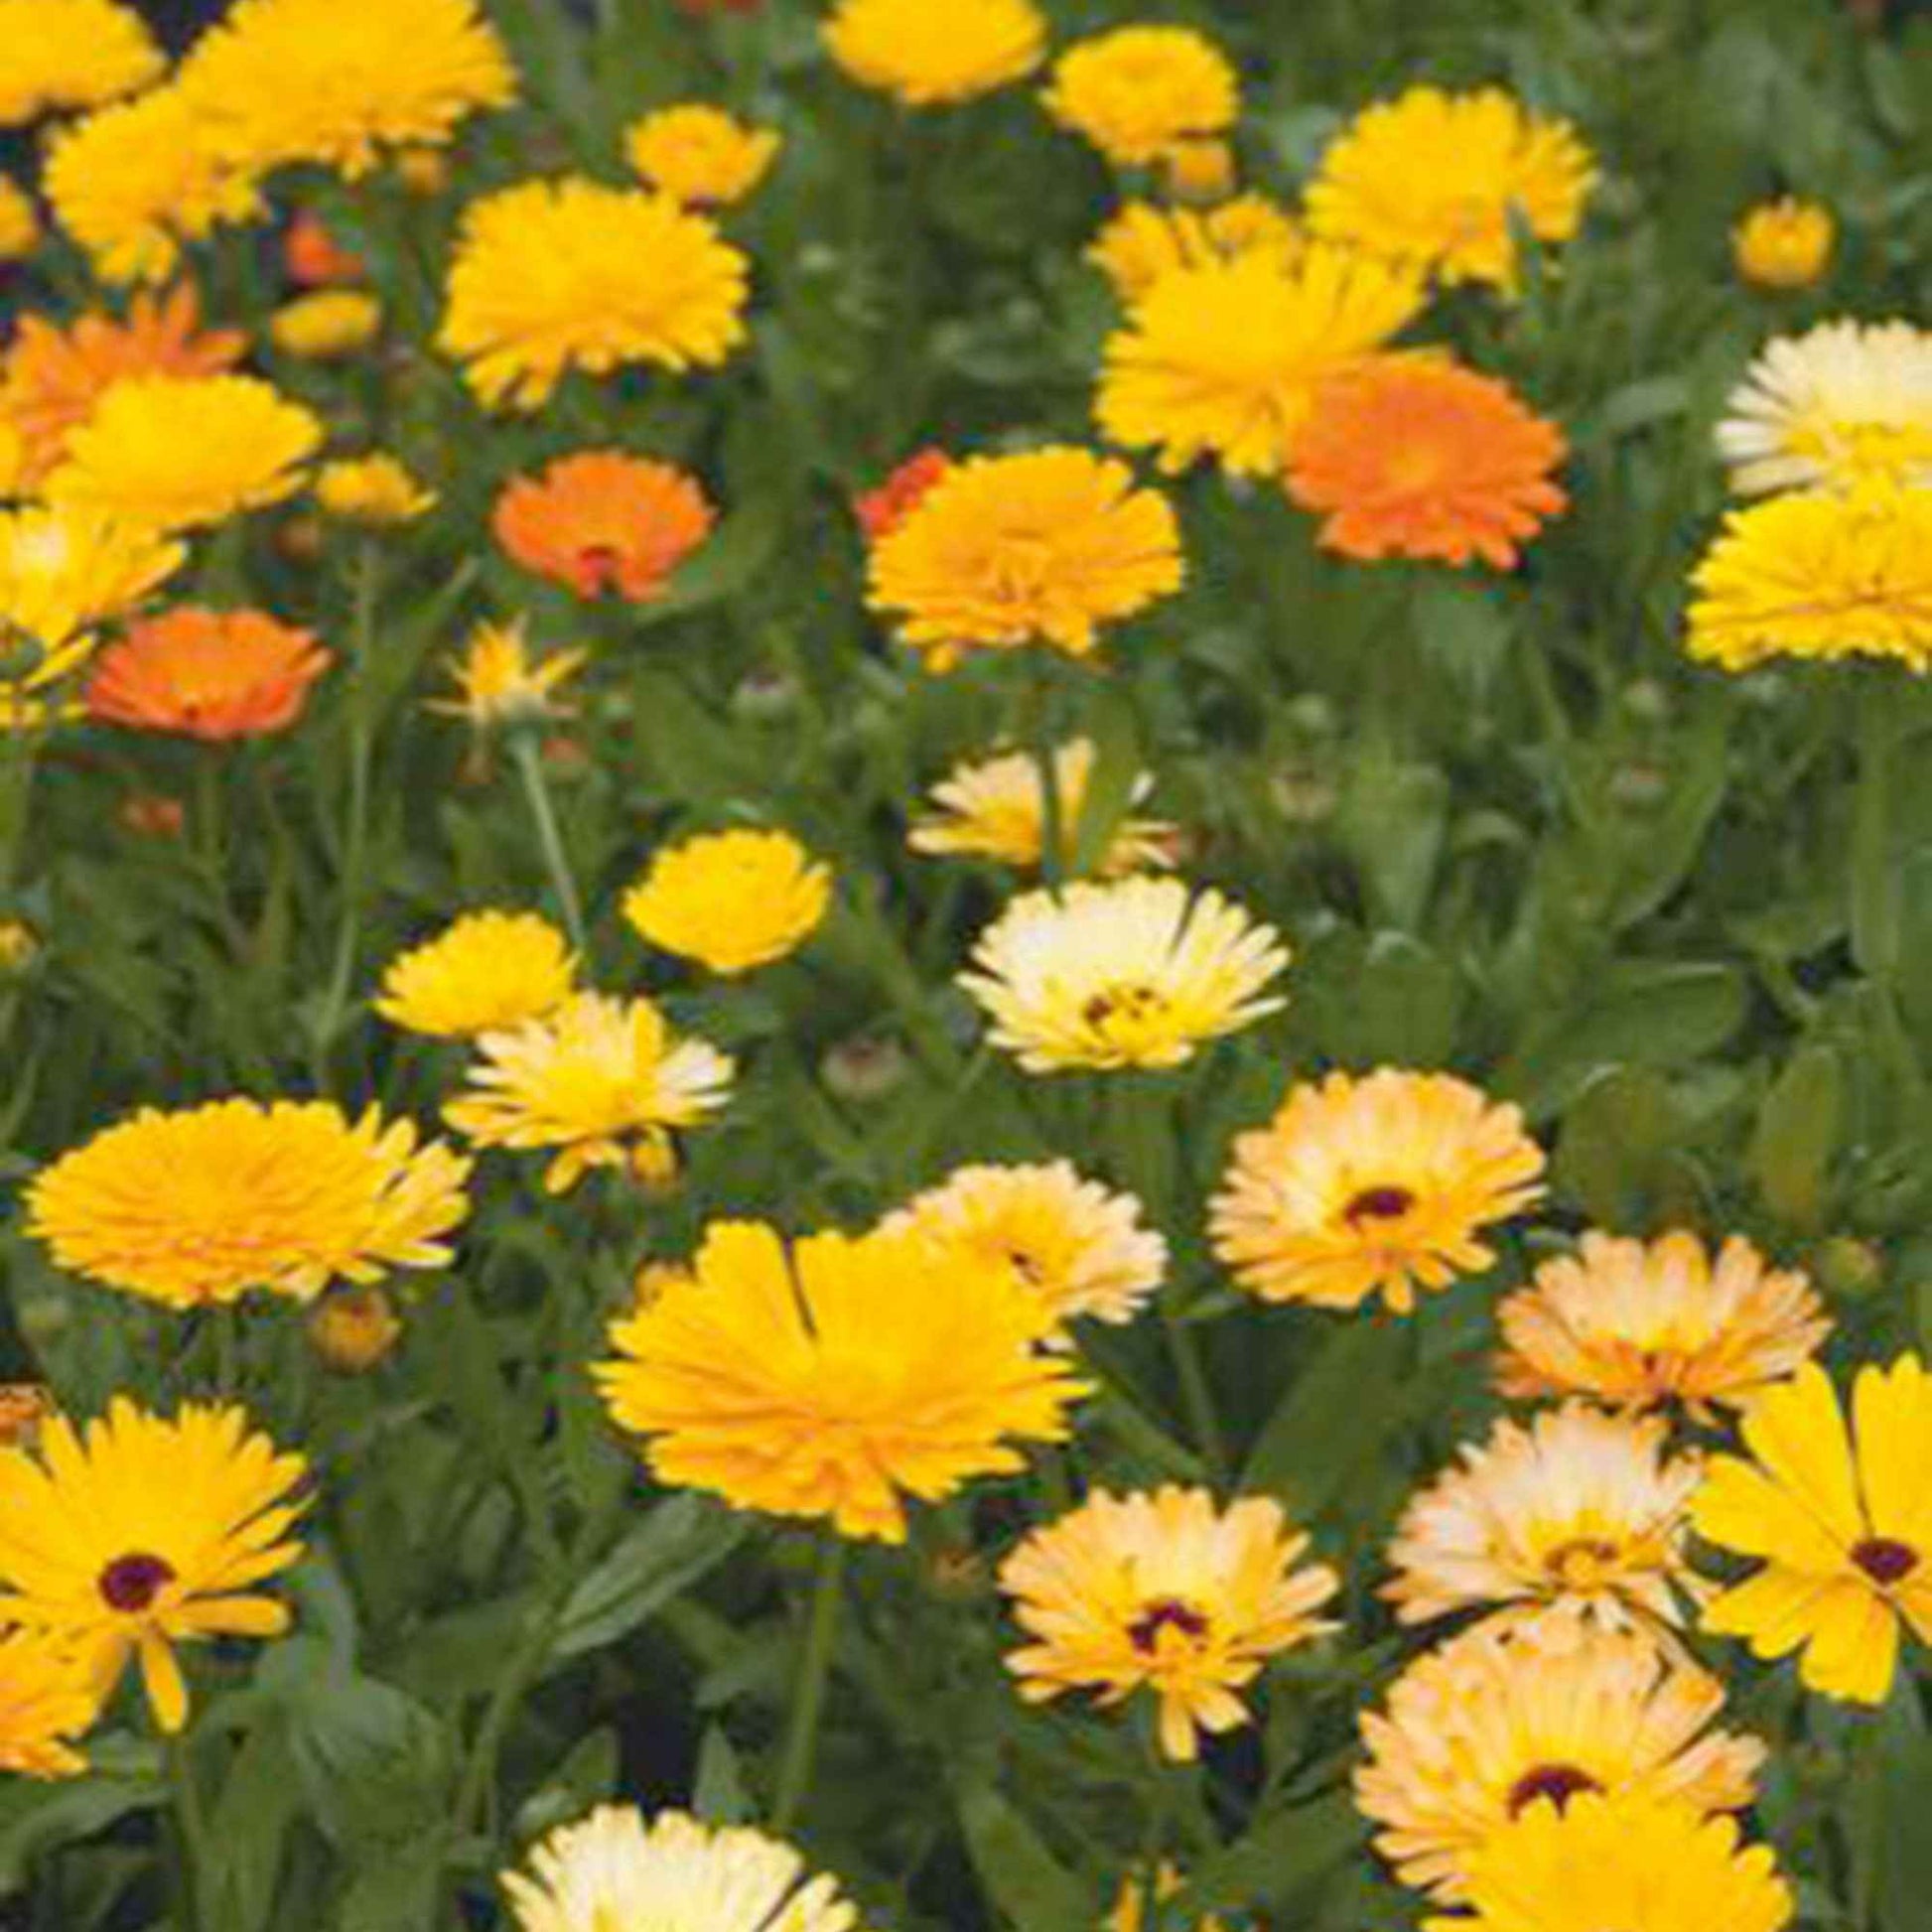 Marigold Calendula 'Pacific Beauty' - Mischung gelb-orange-weiβ 2,5 m² - Blumensamen - Gartenpflanzen